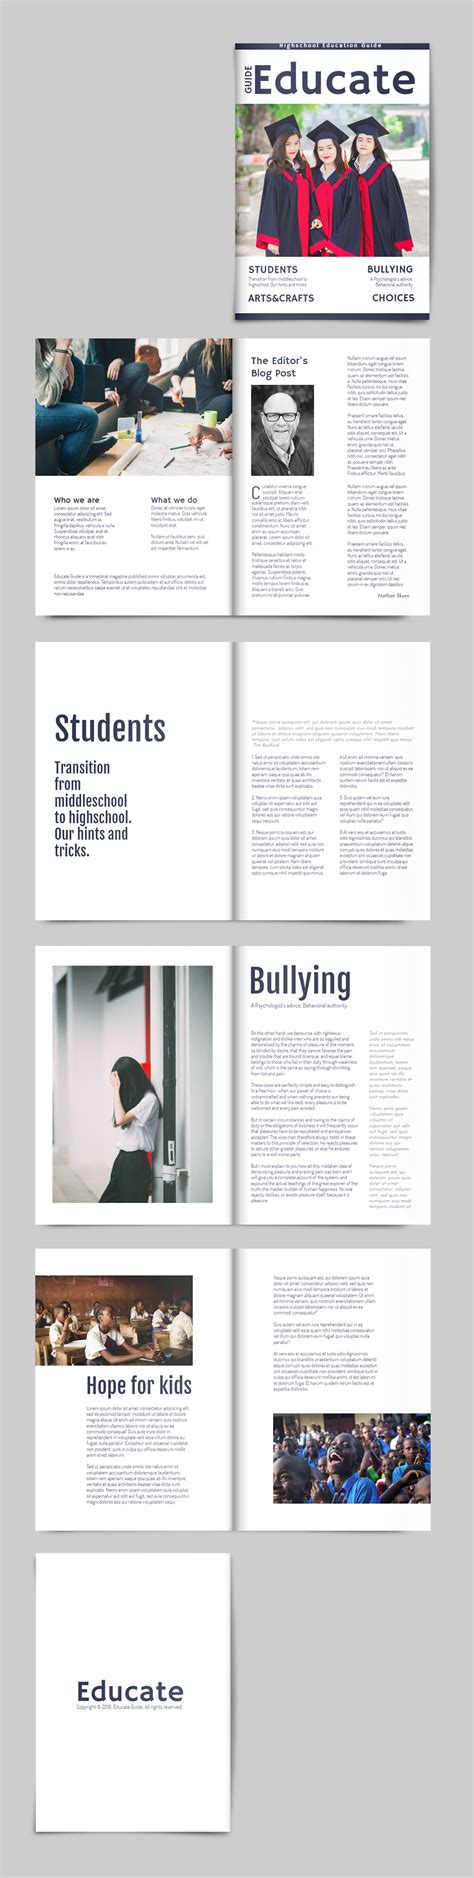 School & College Magazine Template | Magazine template, Magazine layout design, Magazine design